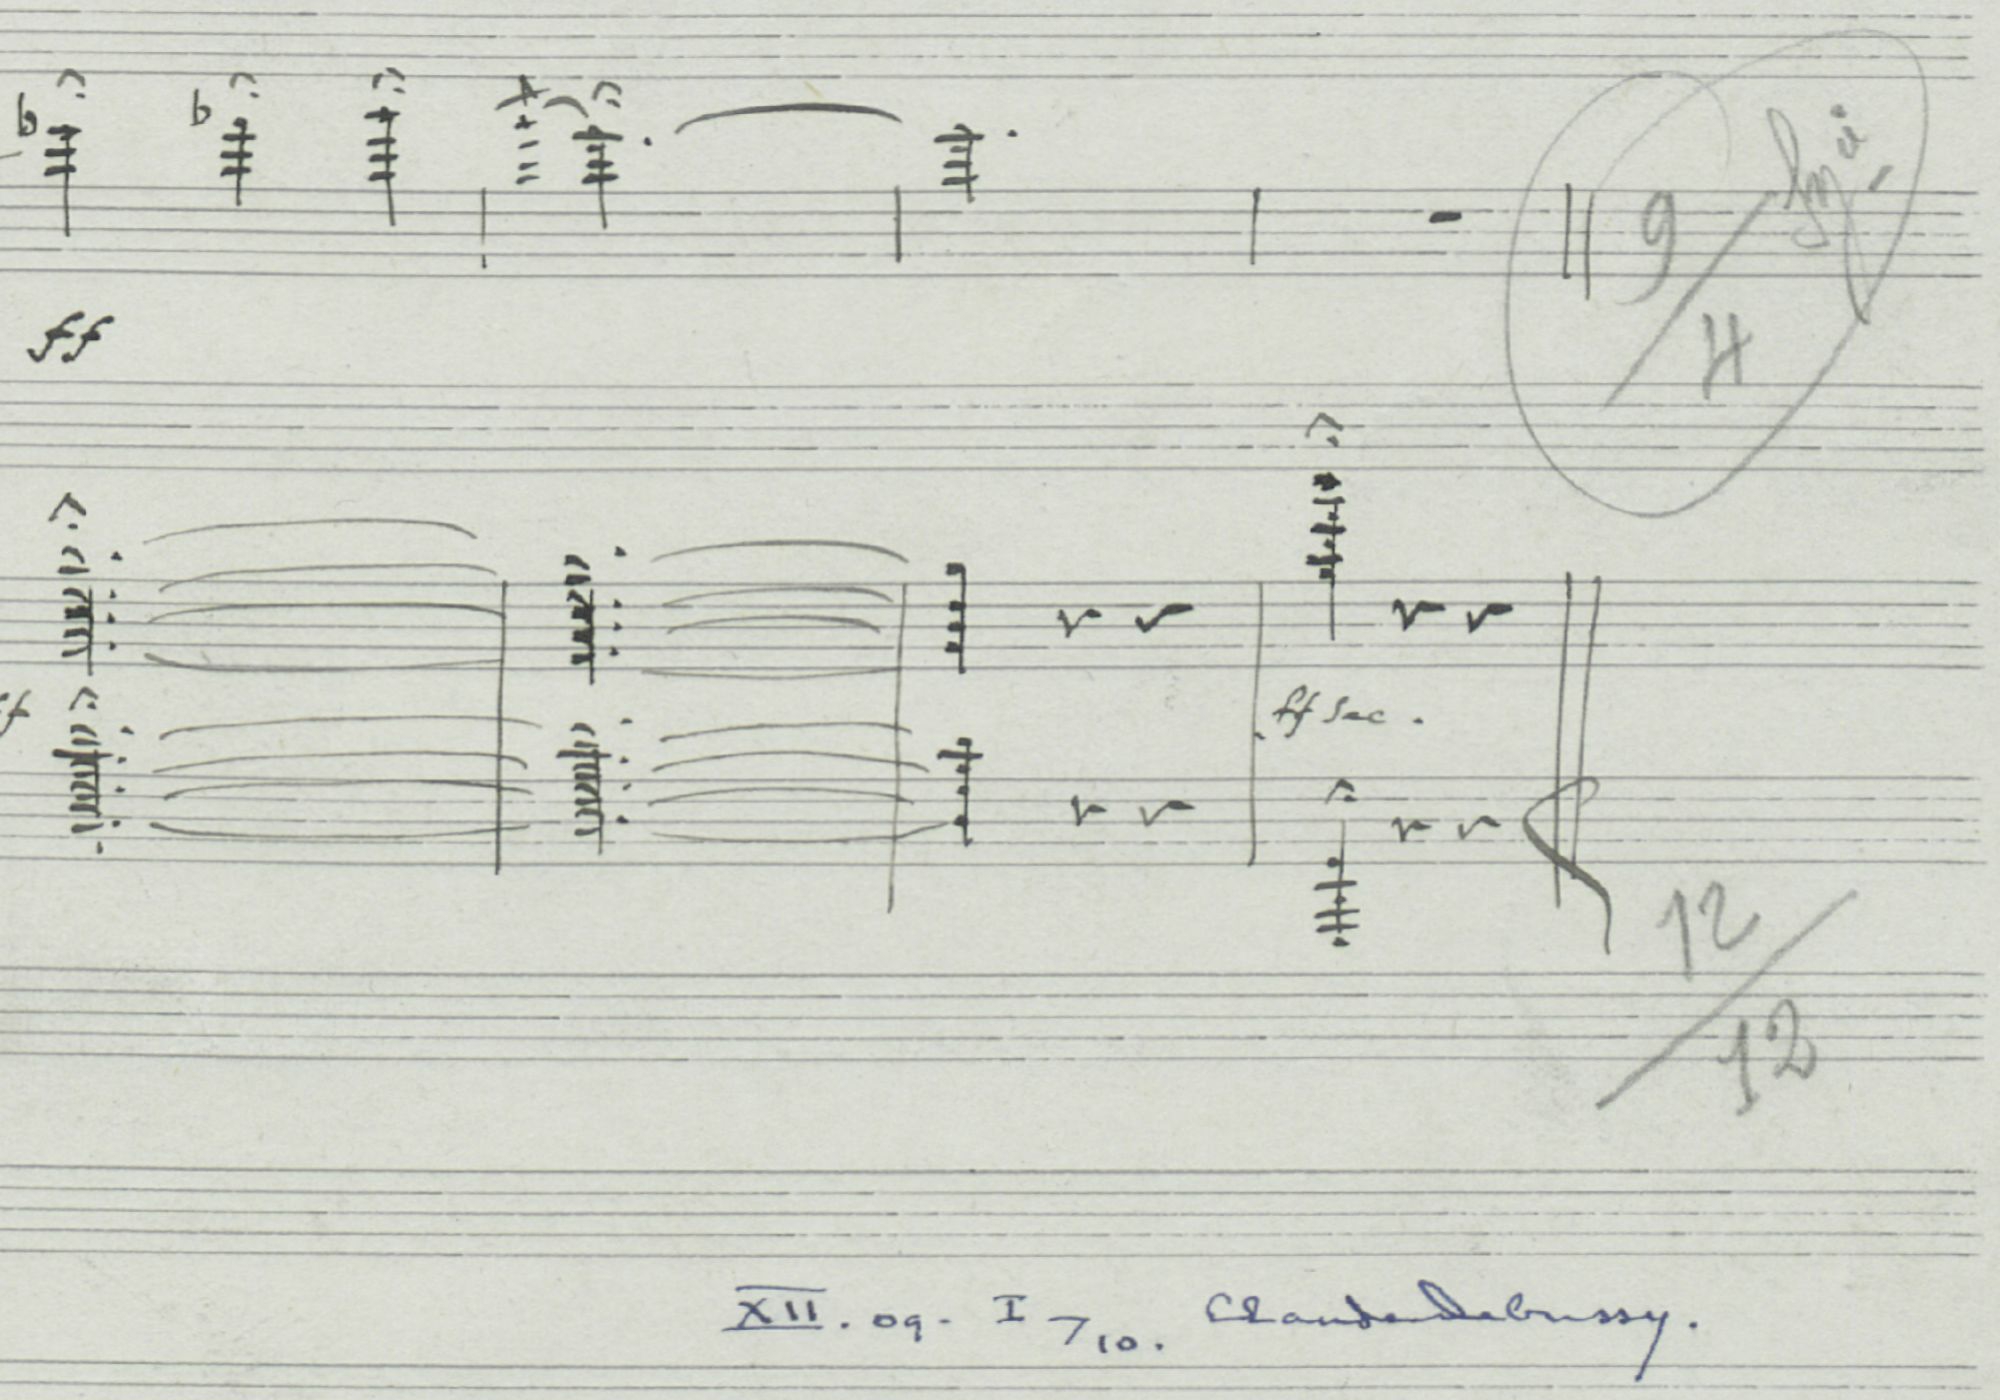 Debussy L 116 date signature